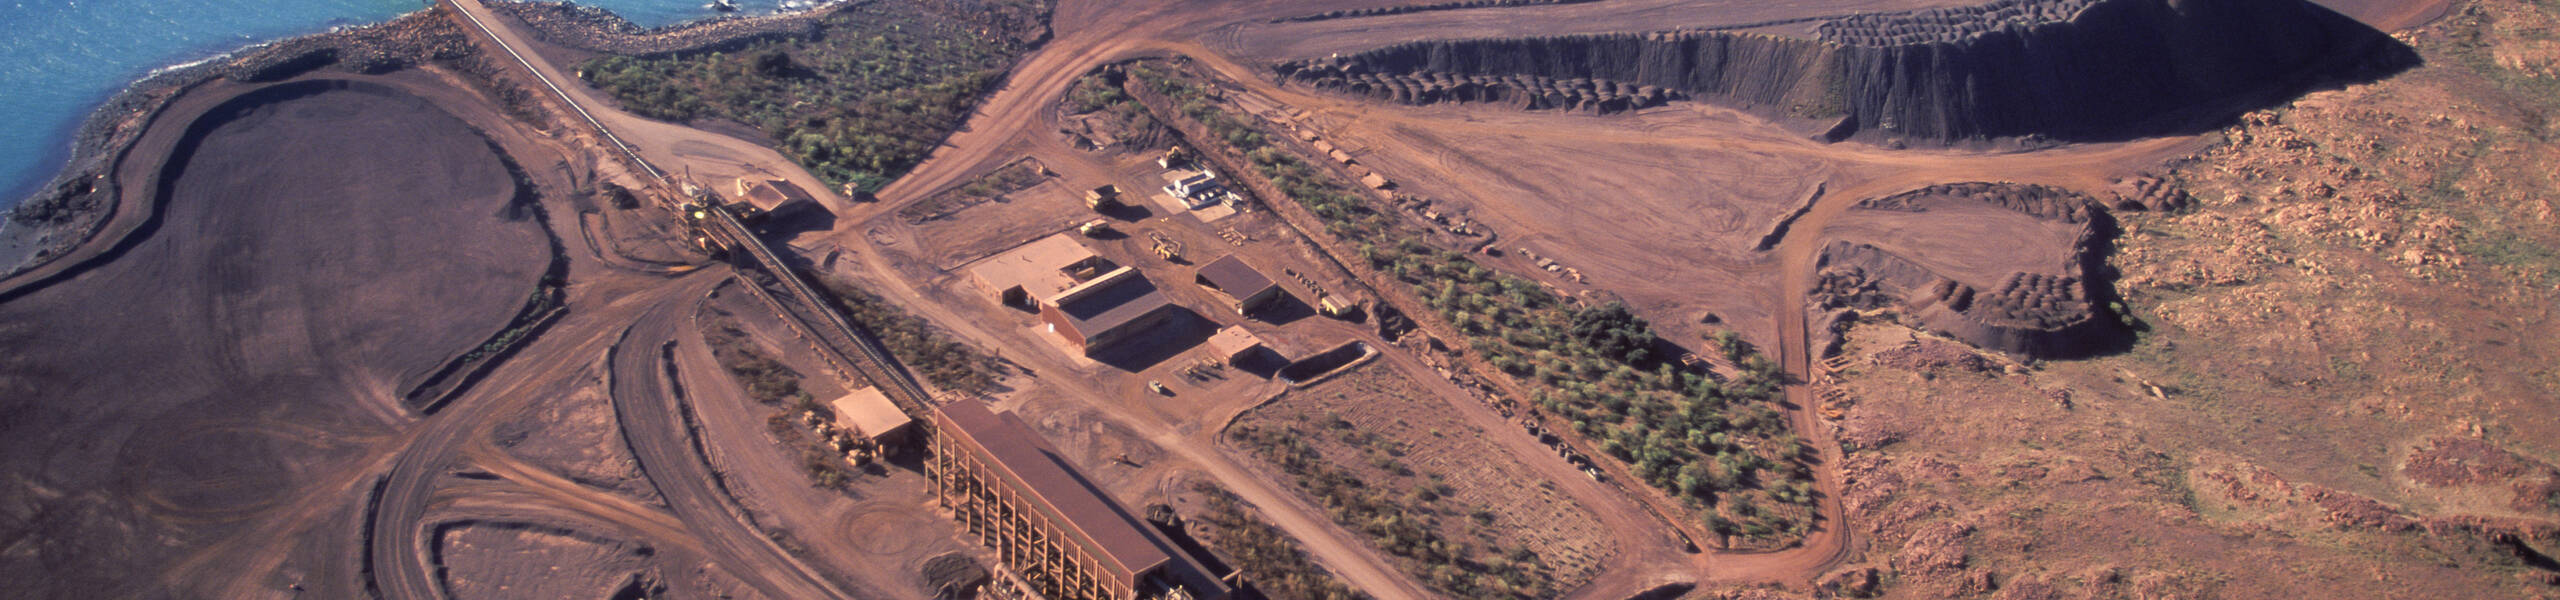 Iron ore market dynamics may hurt Aussie